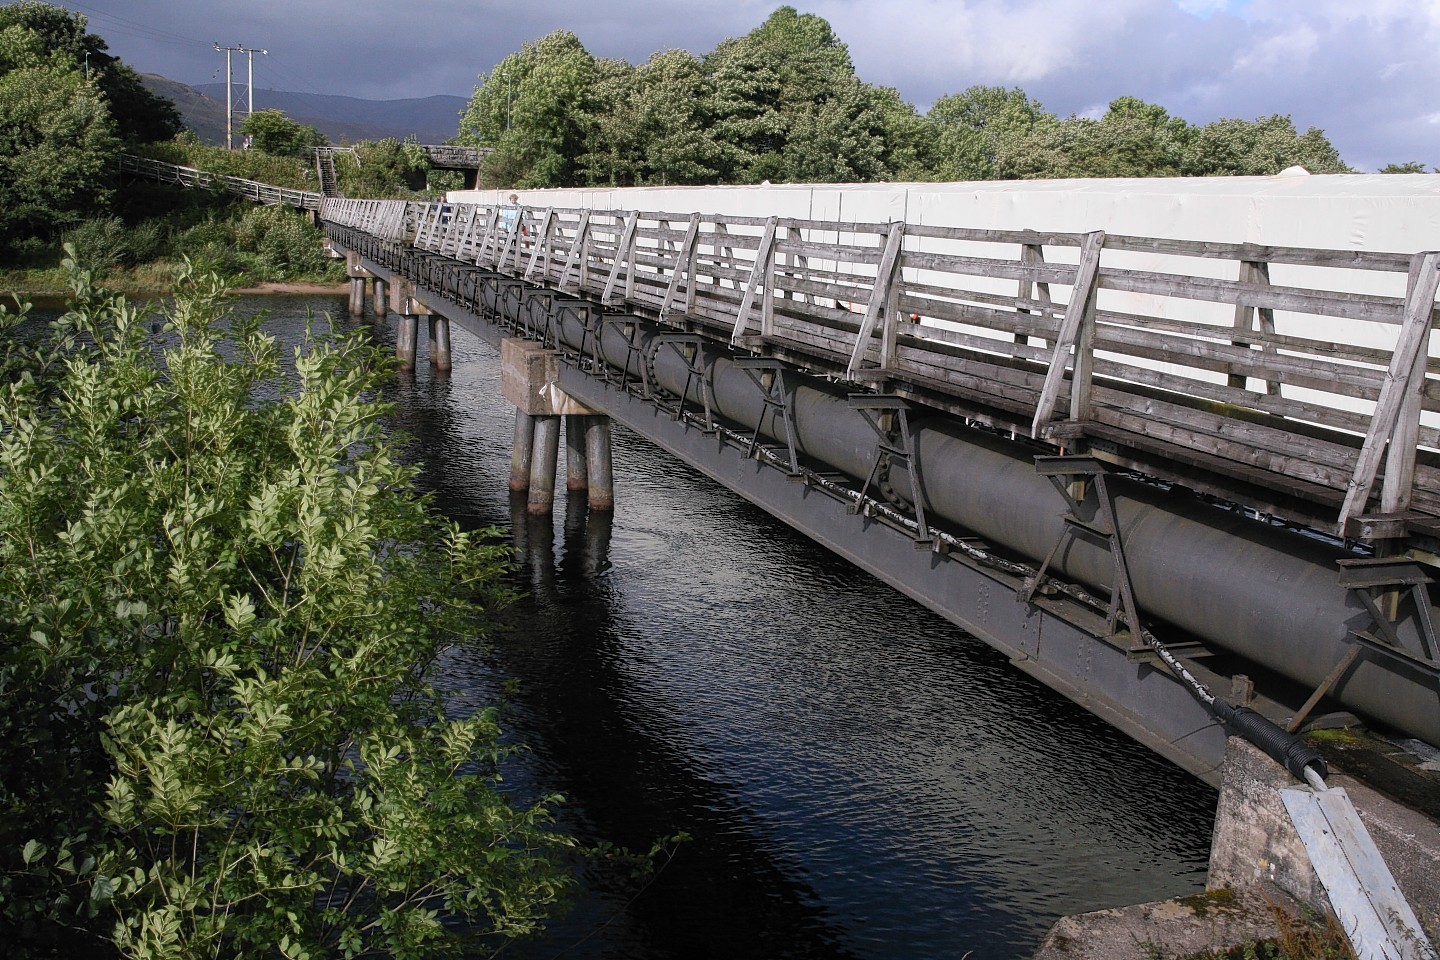 Soldiers' Bridge footbridge over the River Lochy in Lochaber